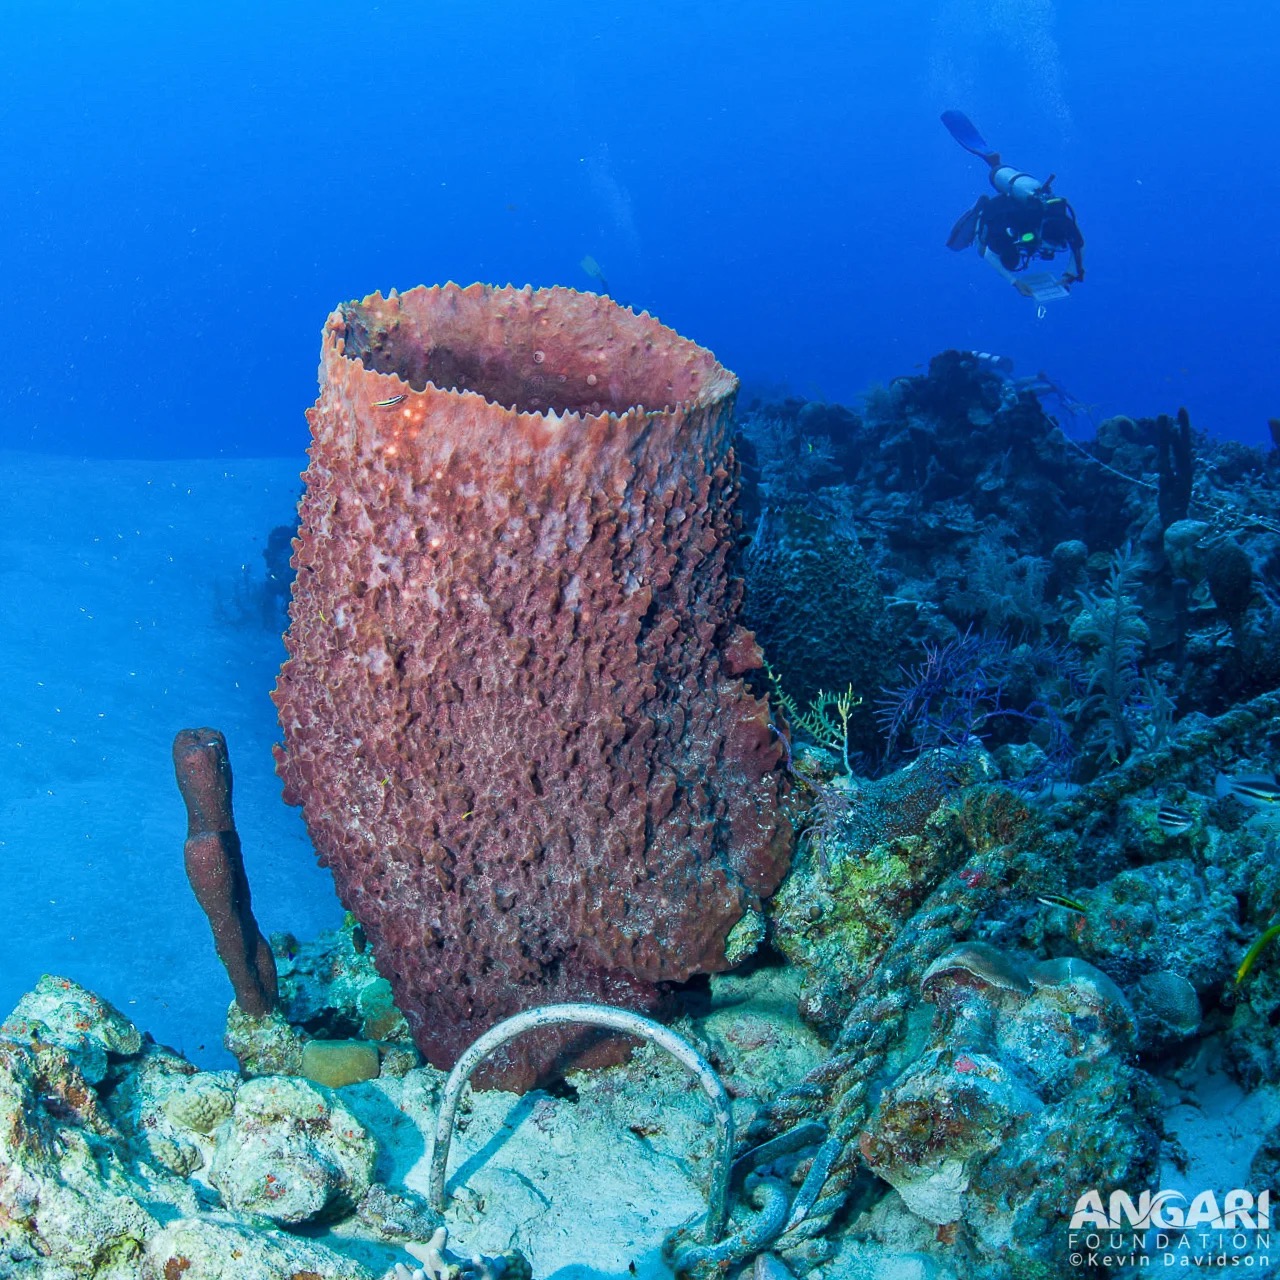 Giant Barrel Sponge (Xestospongia muta) - ANGARI Foundation